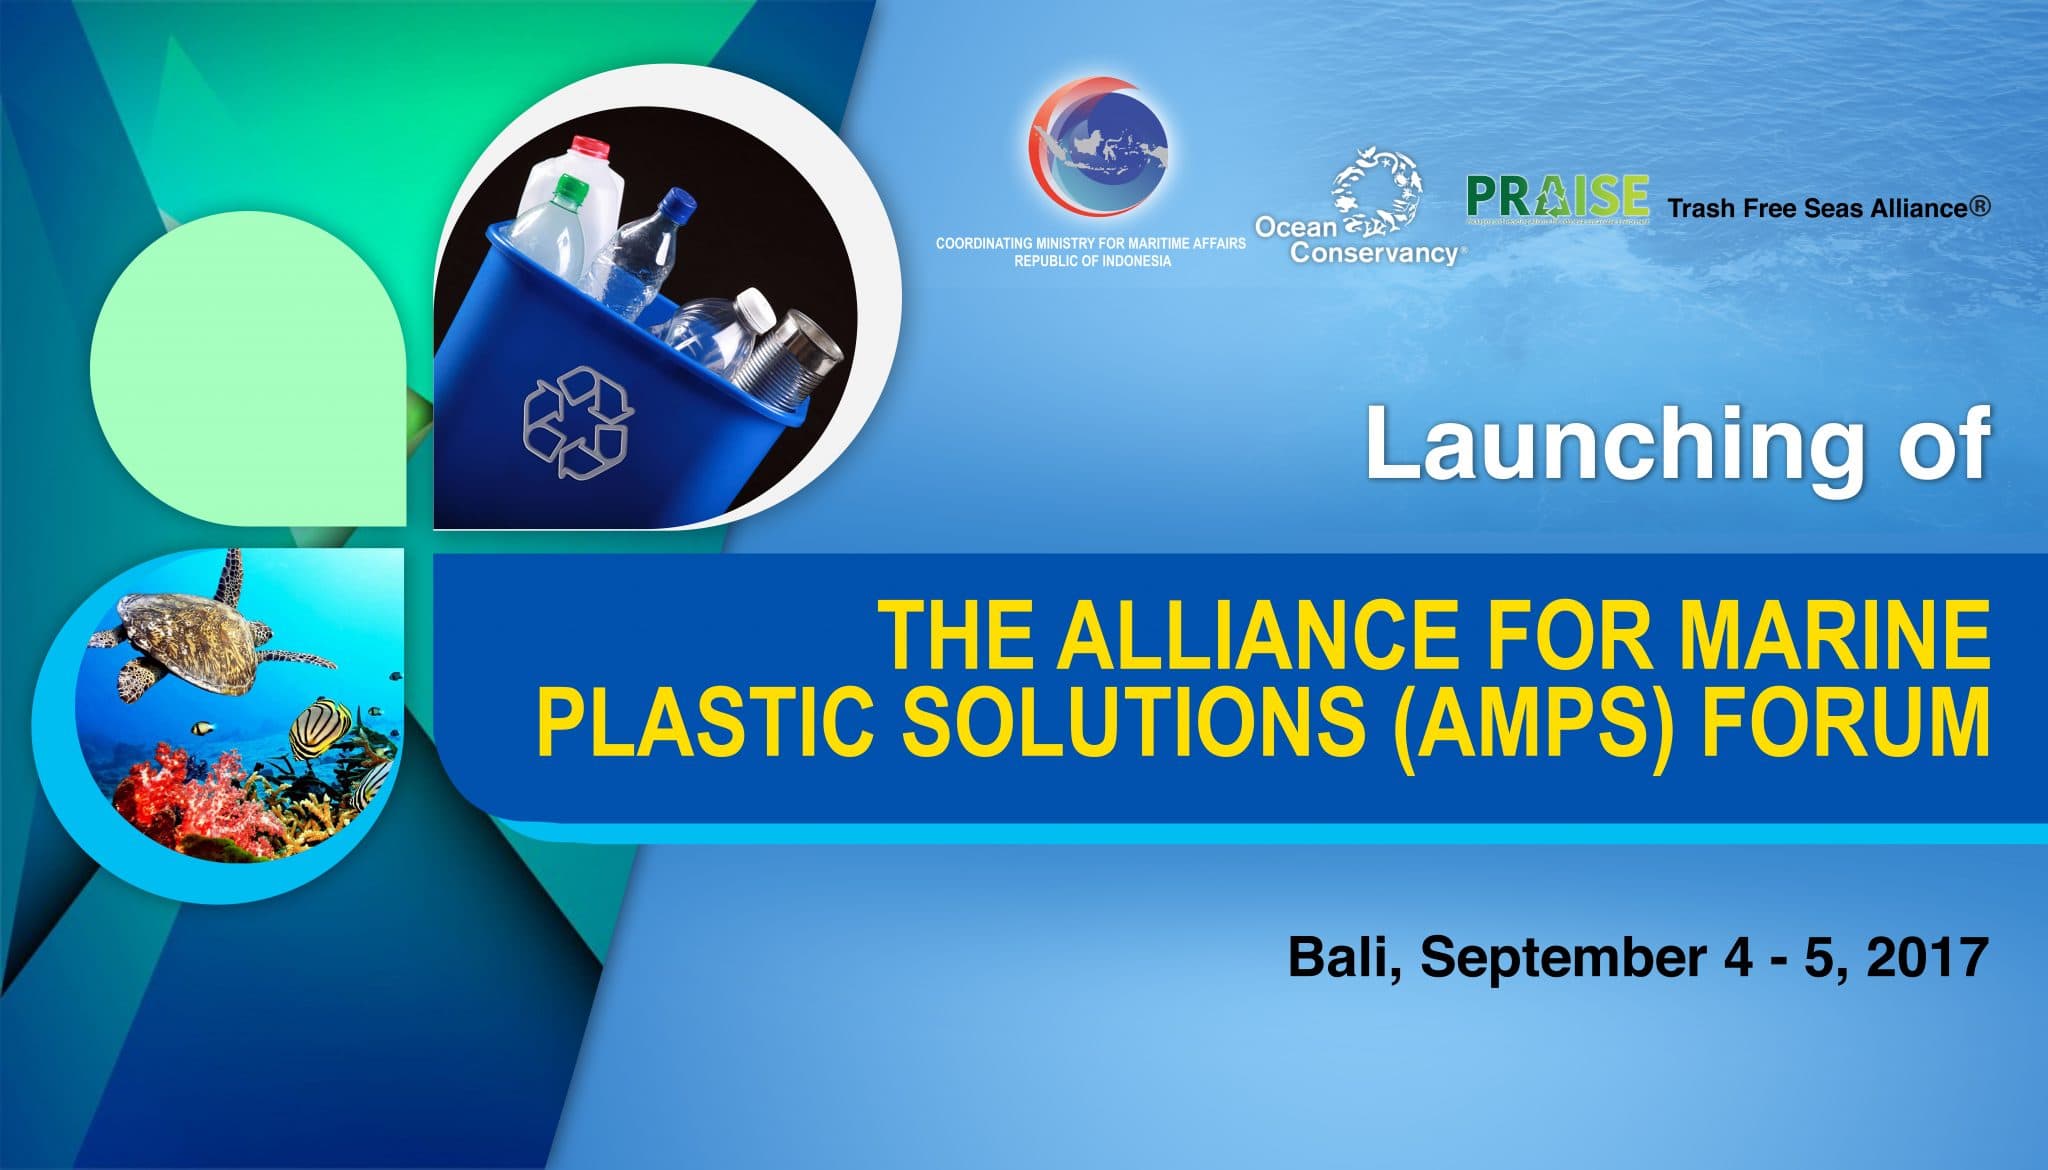 Alliance for Marine Plastic Solutions (AMPS) Forum